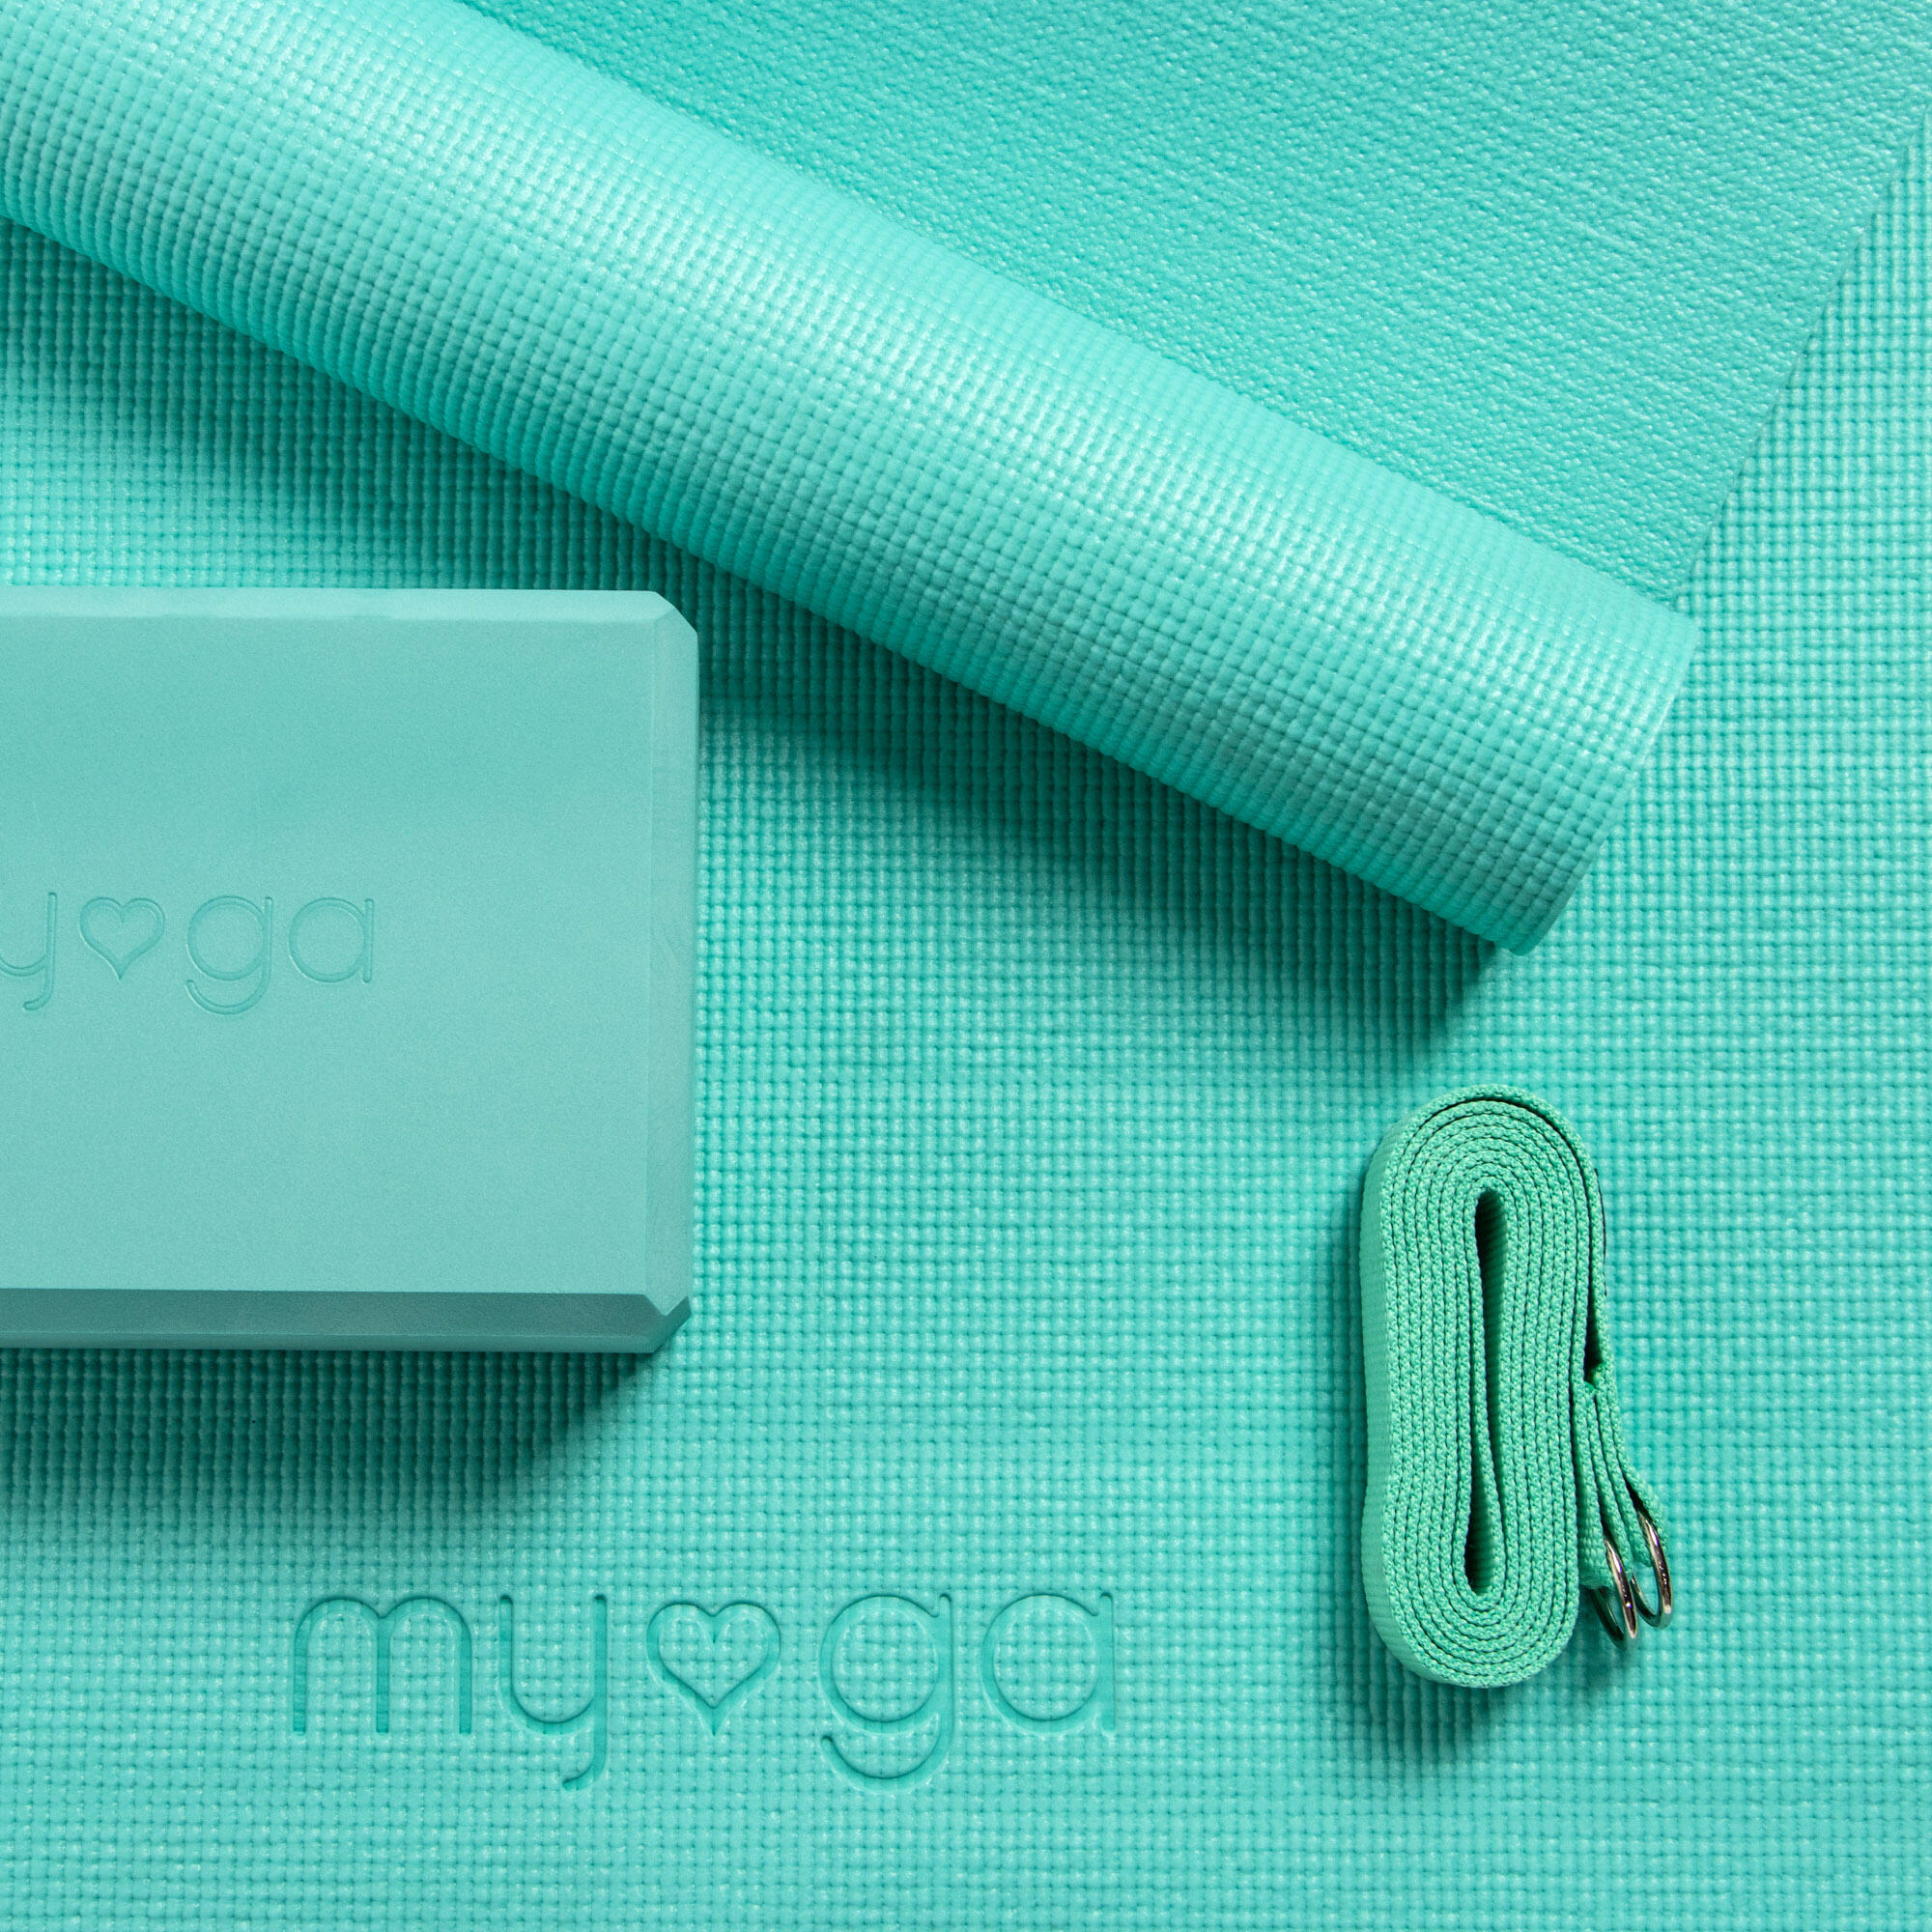 Myga Yoga Starter Kit - Turquoise MYGA